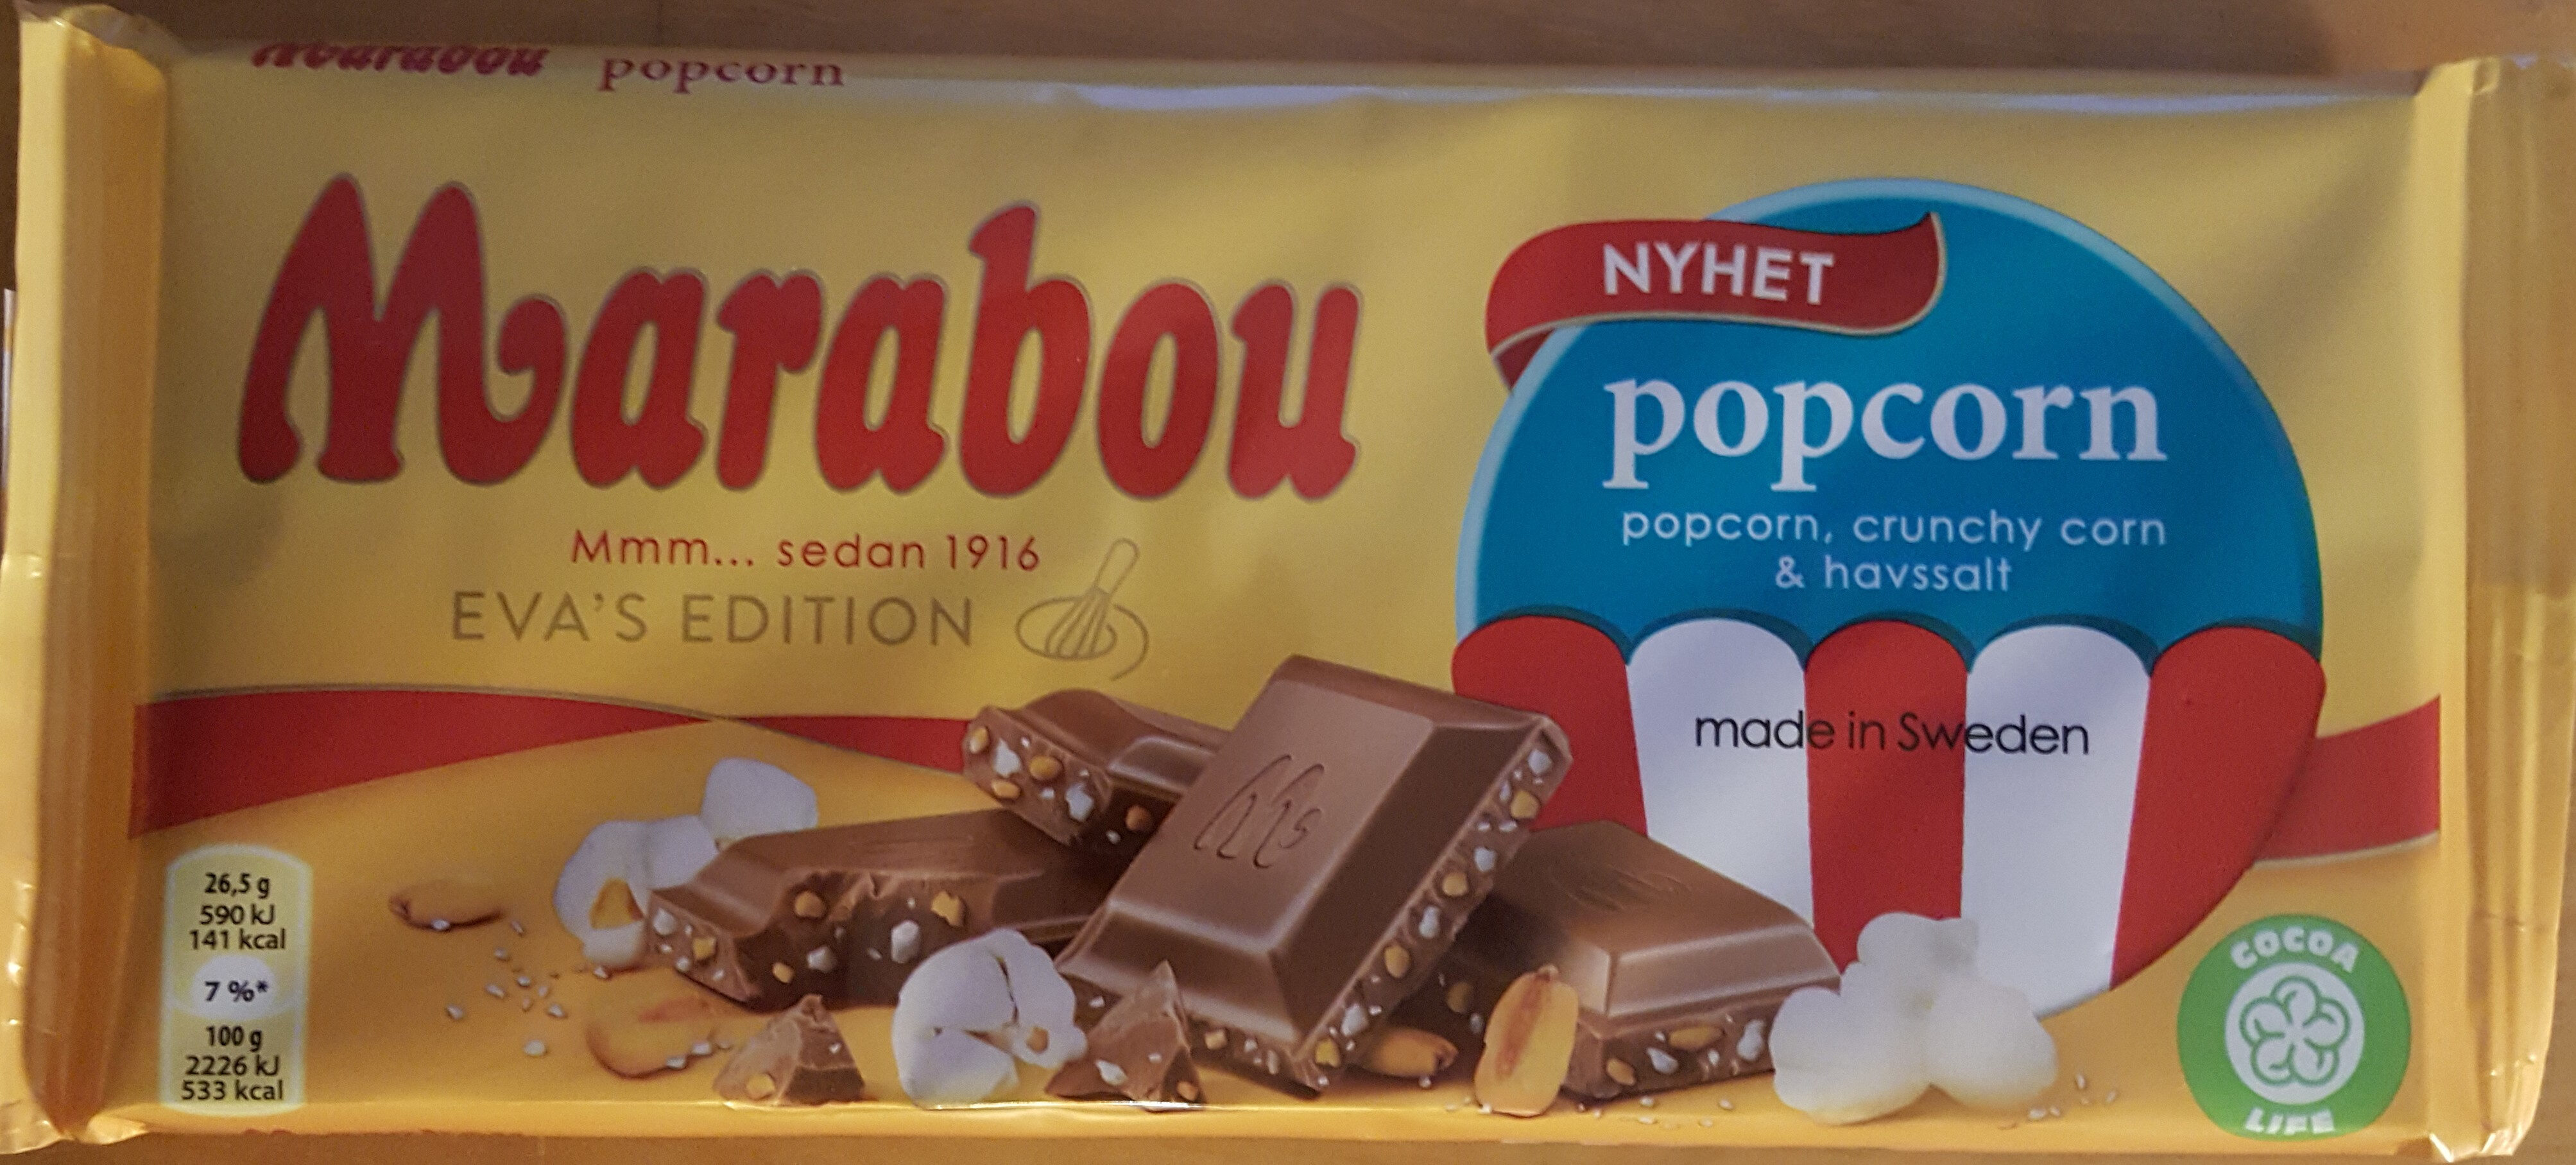 Marabou - Popcorn - Popcorn, crunchy corn & havssalt - Produkt